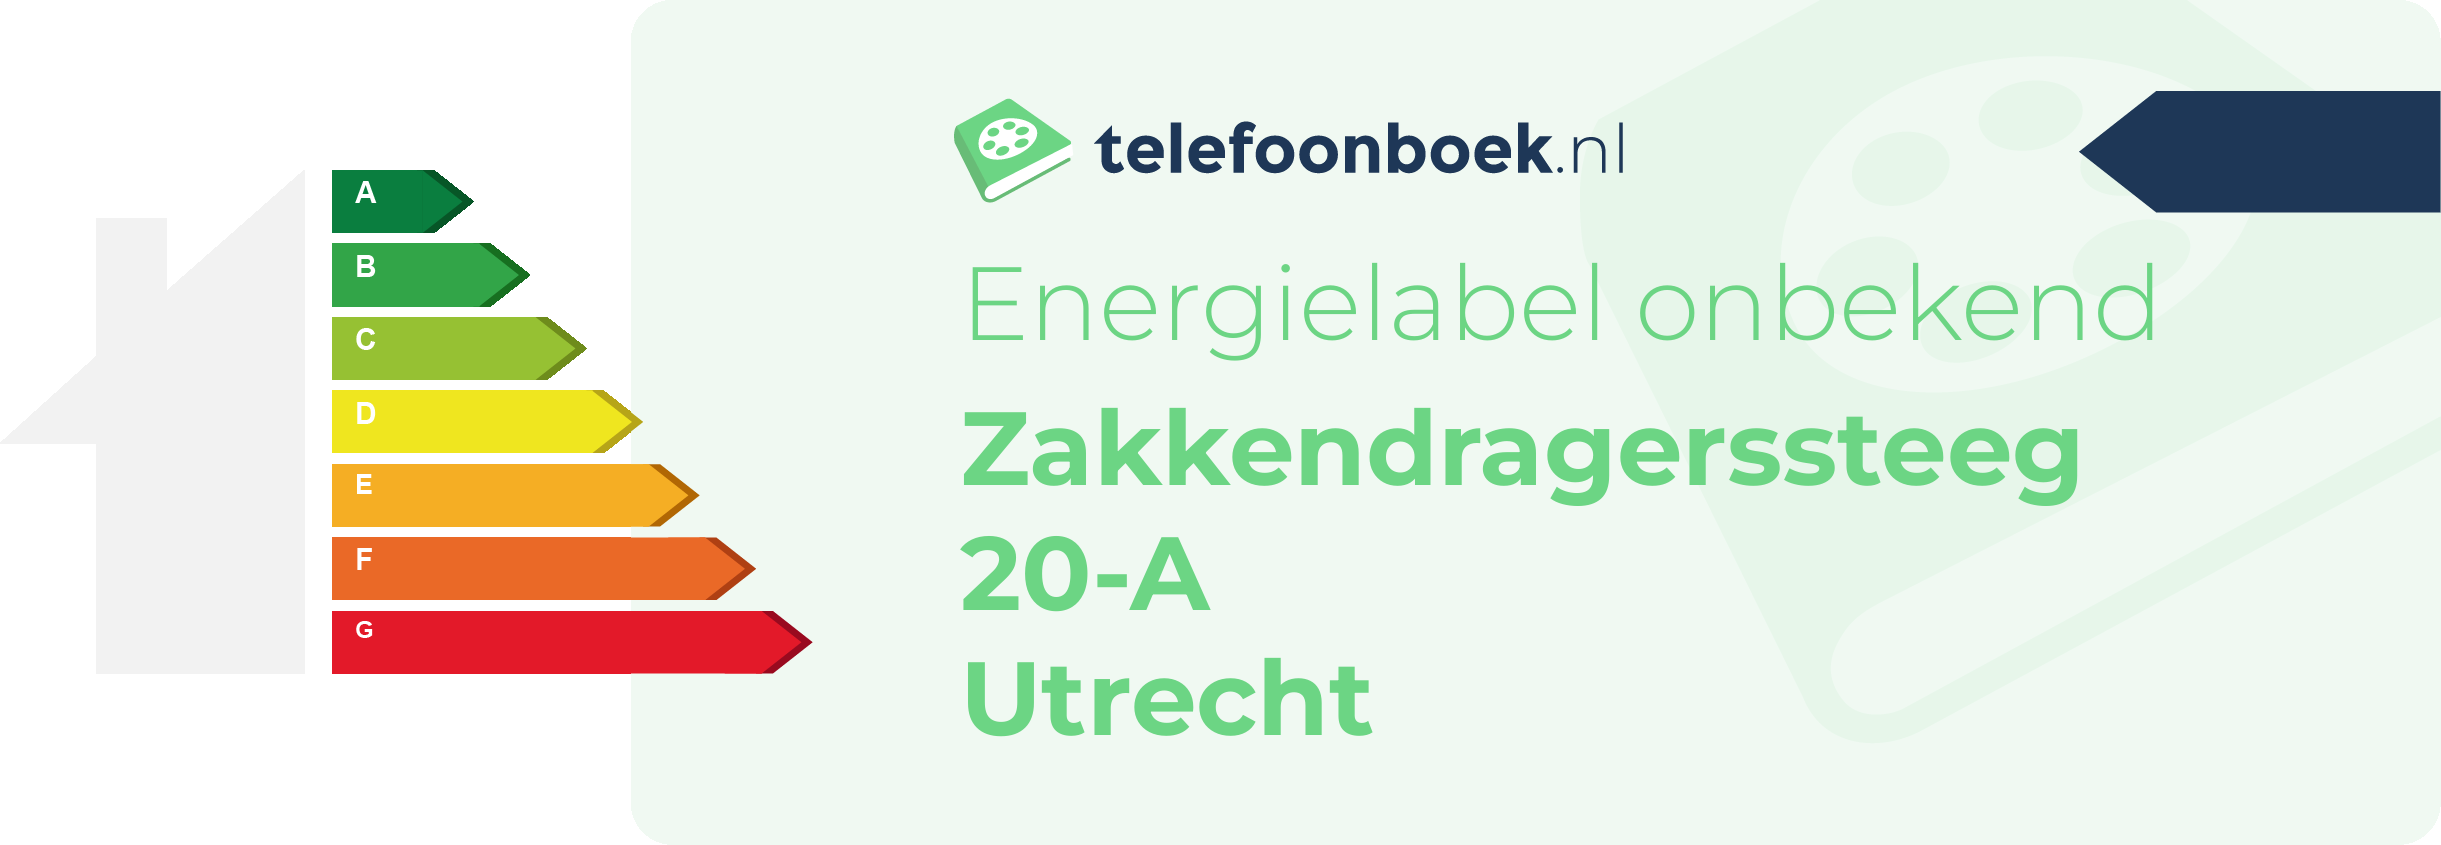 Energielabel Zakkendragerssteeg 20-A Utrecht